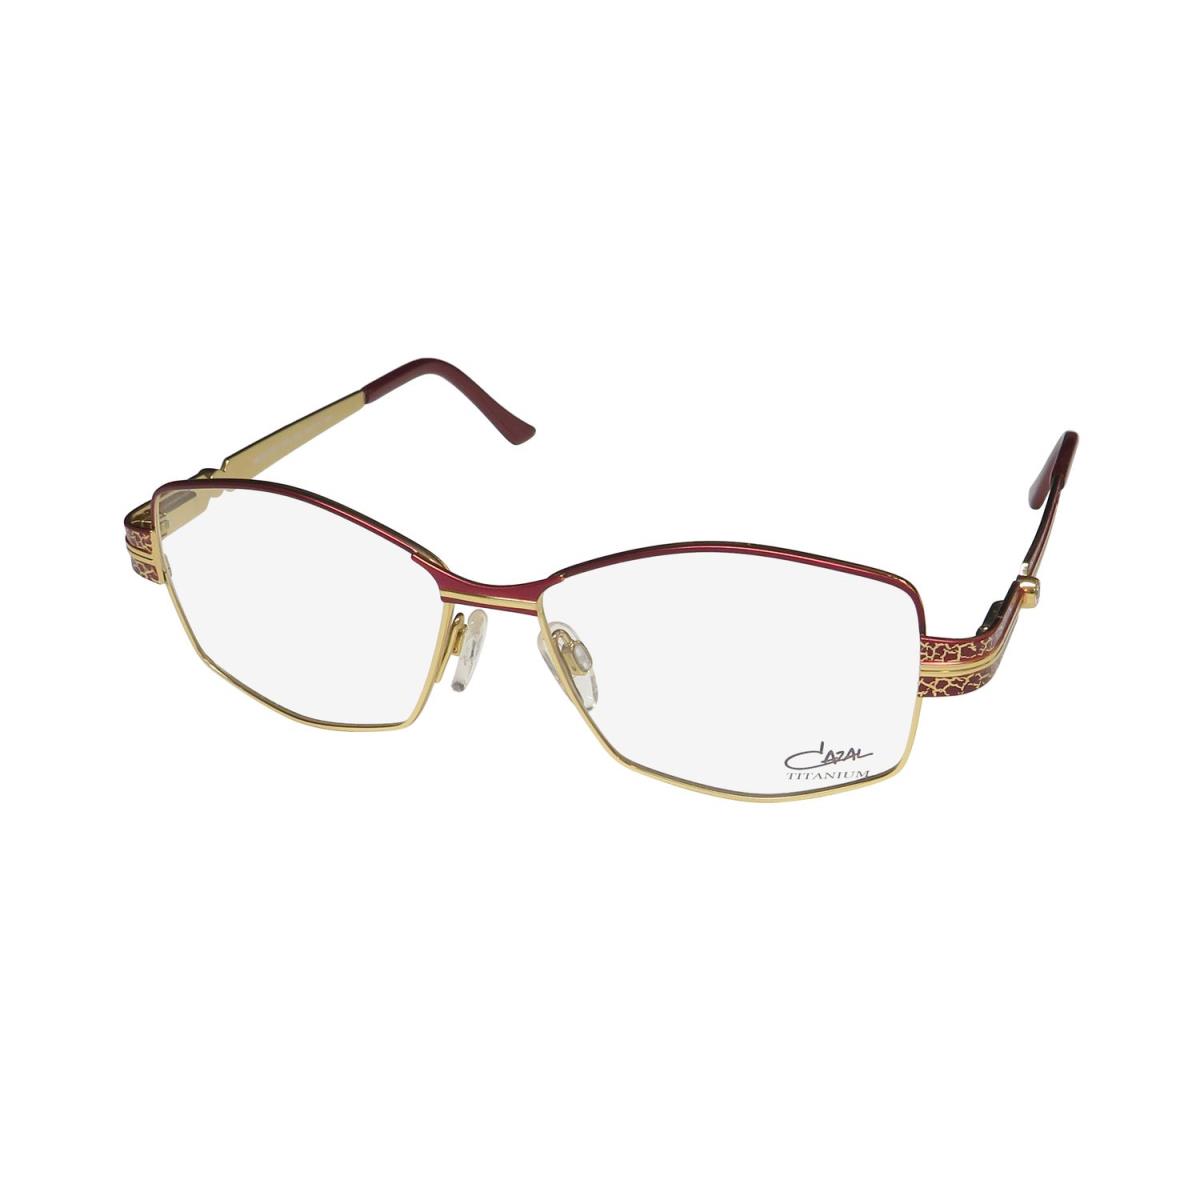 Cazal 1253 Titanium Retro/vintage Collection Rare Eyeglass Frame/glasses Bordeaux / Gold